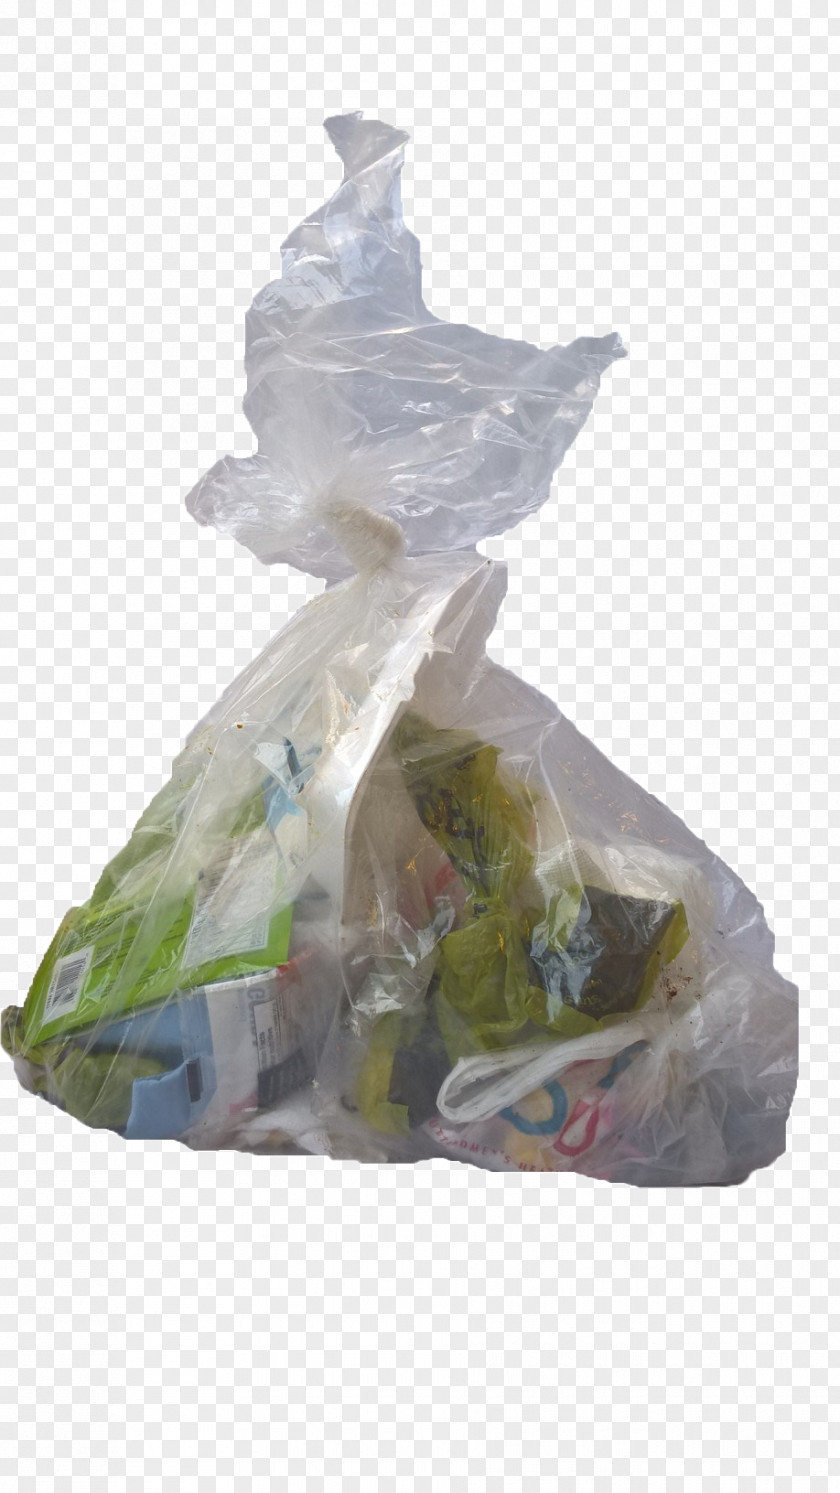 Garbage Collection Plastic Bin Bag Waste Kerbside Transfer Station PNG